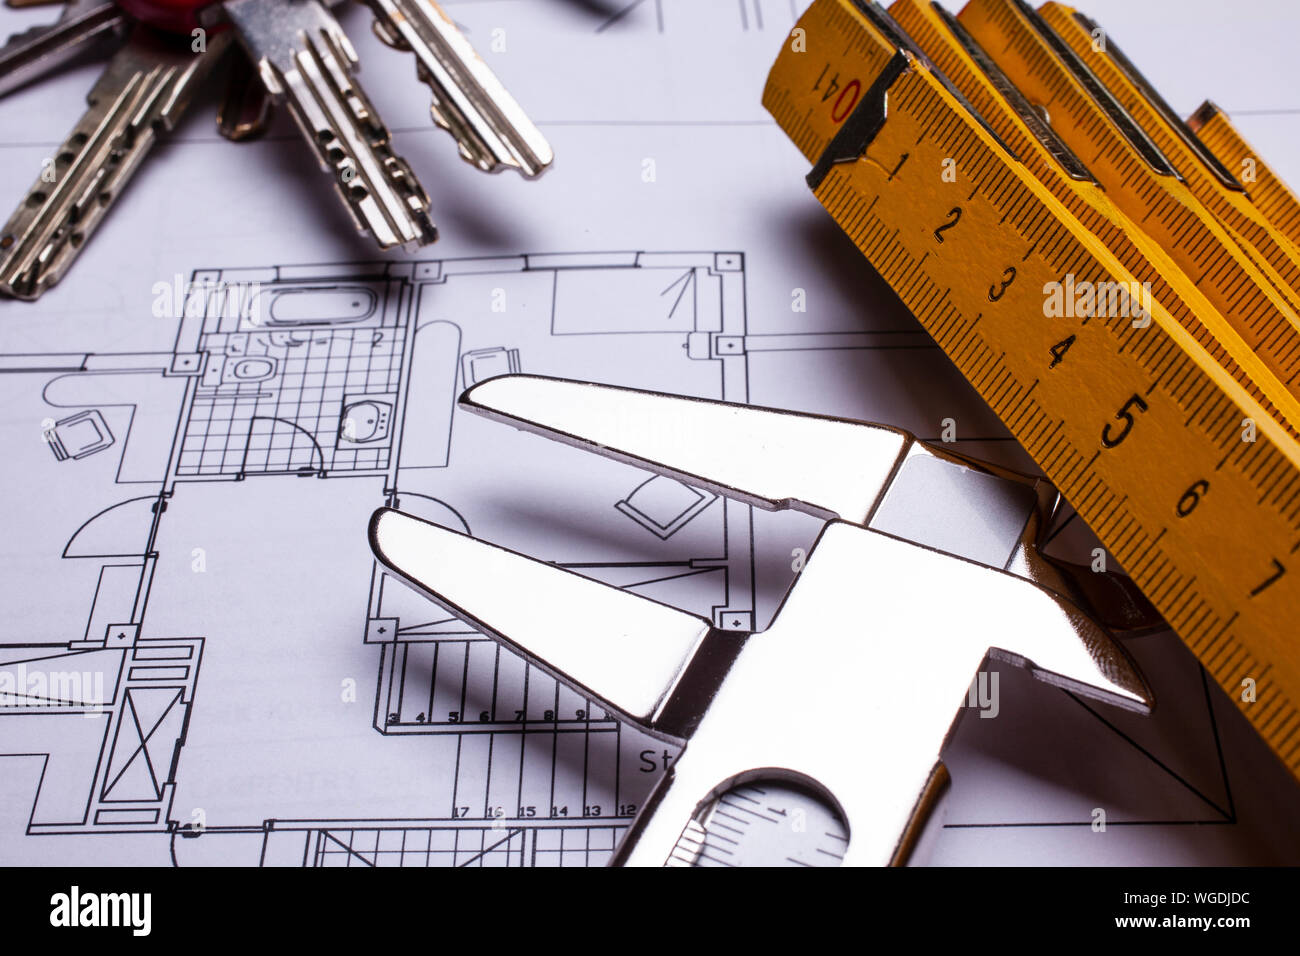 house blueprint, wood measuring stick, gauge and keys - real estate concept Stock Photo